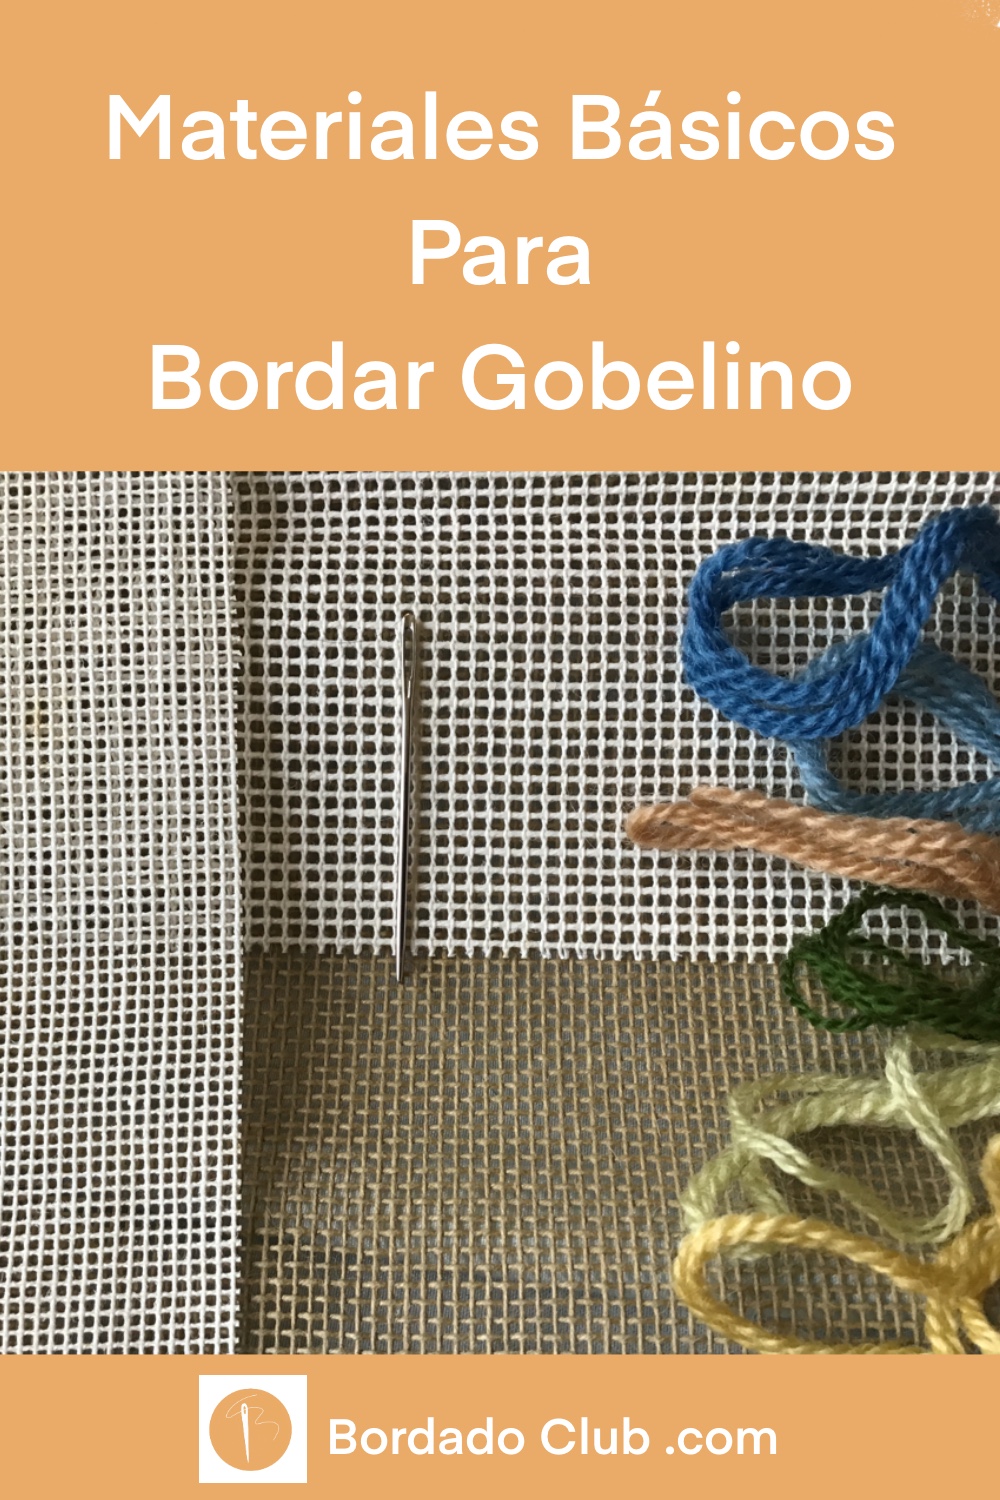 Bordado Gobelino Materiales Basicos